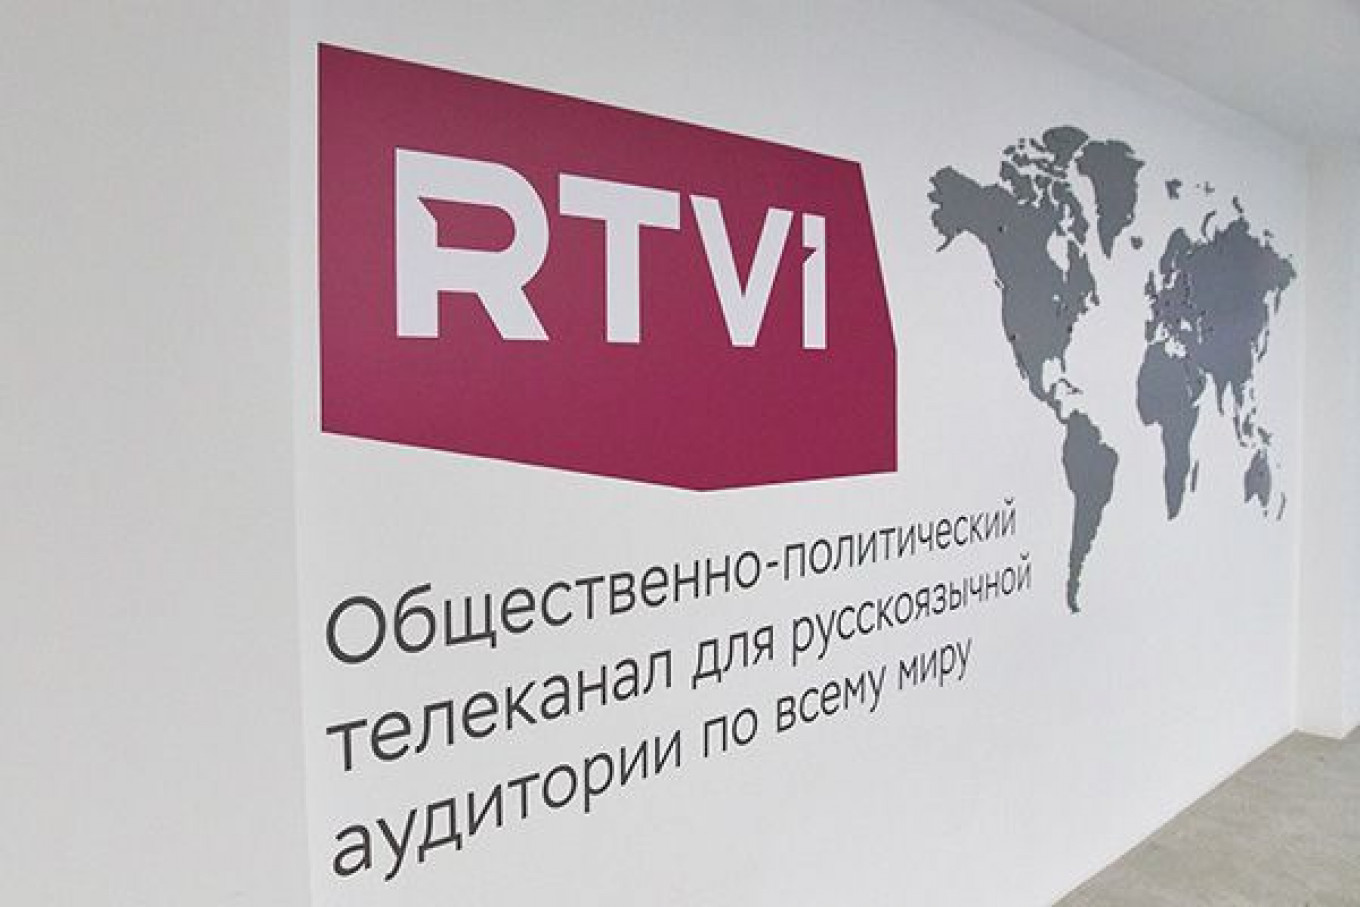 U.S. Businessman Buys Russian-Language RTVI Broadcaster